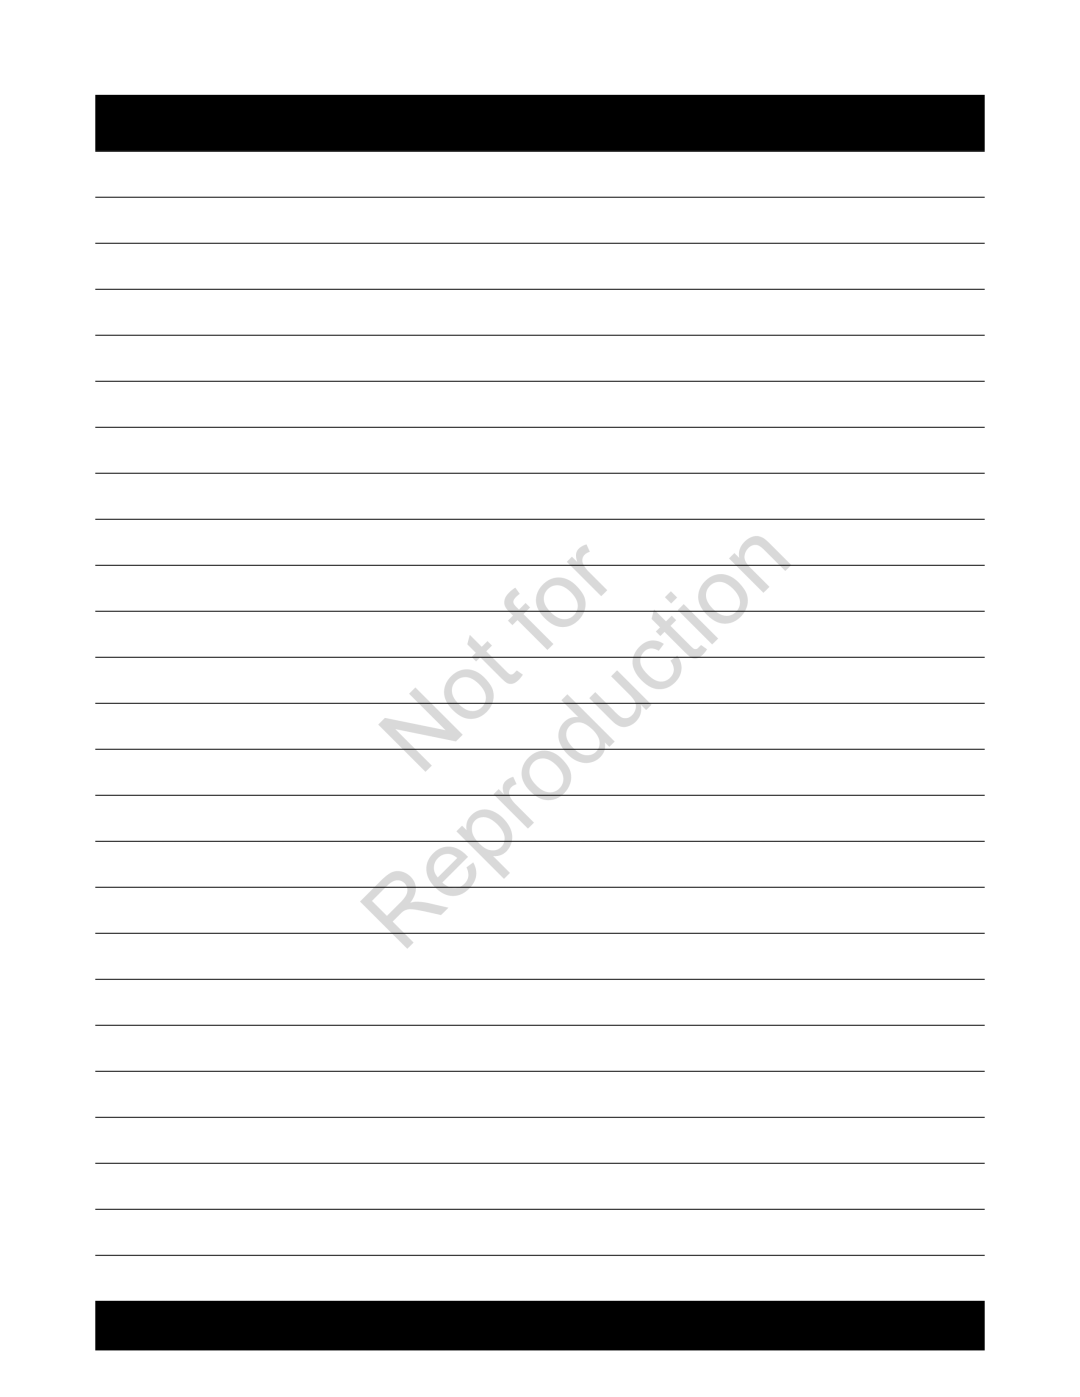 Snapper 20 manual Notes, Reproduction 